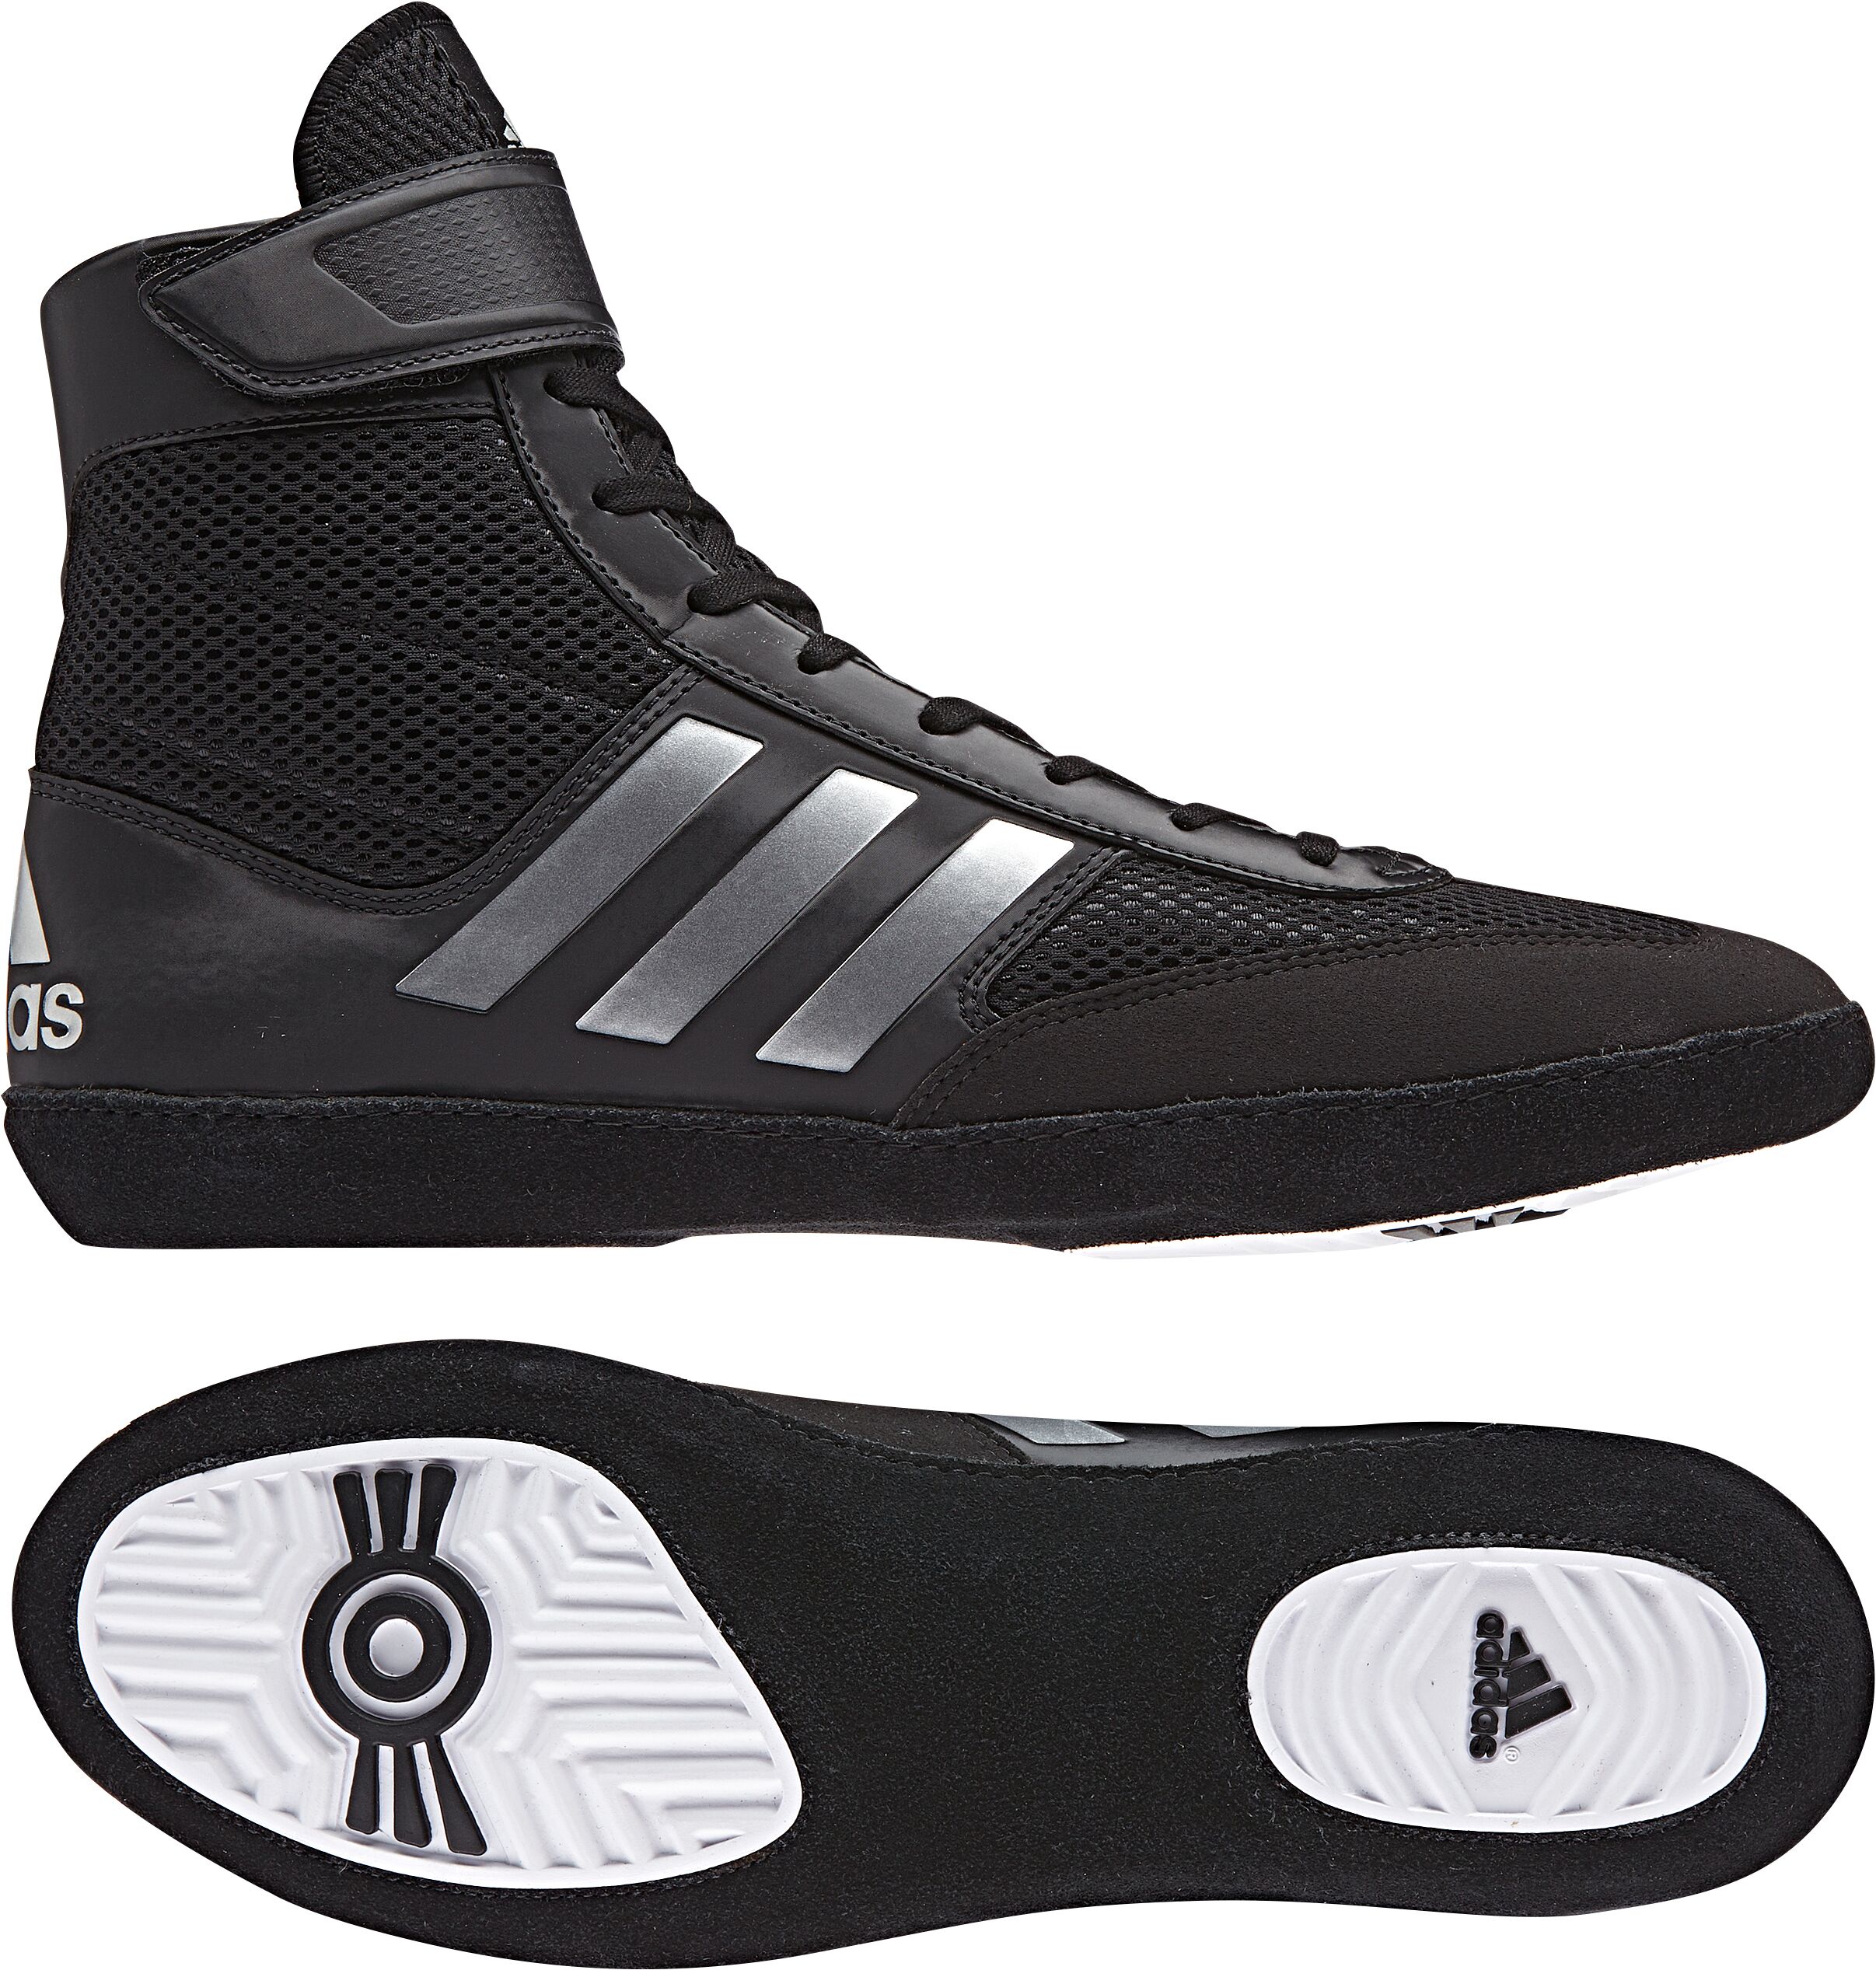 Adidas Combat Speed 5 Wrestling Shoes, color: Black/Silver/Black